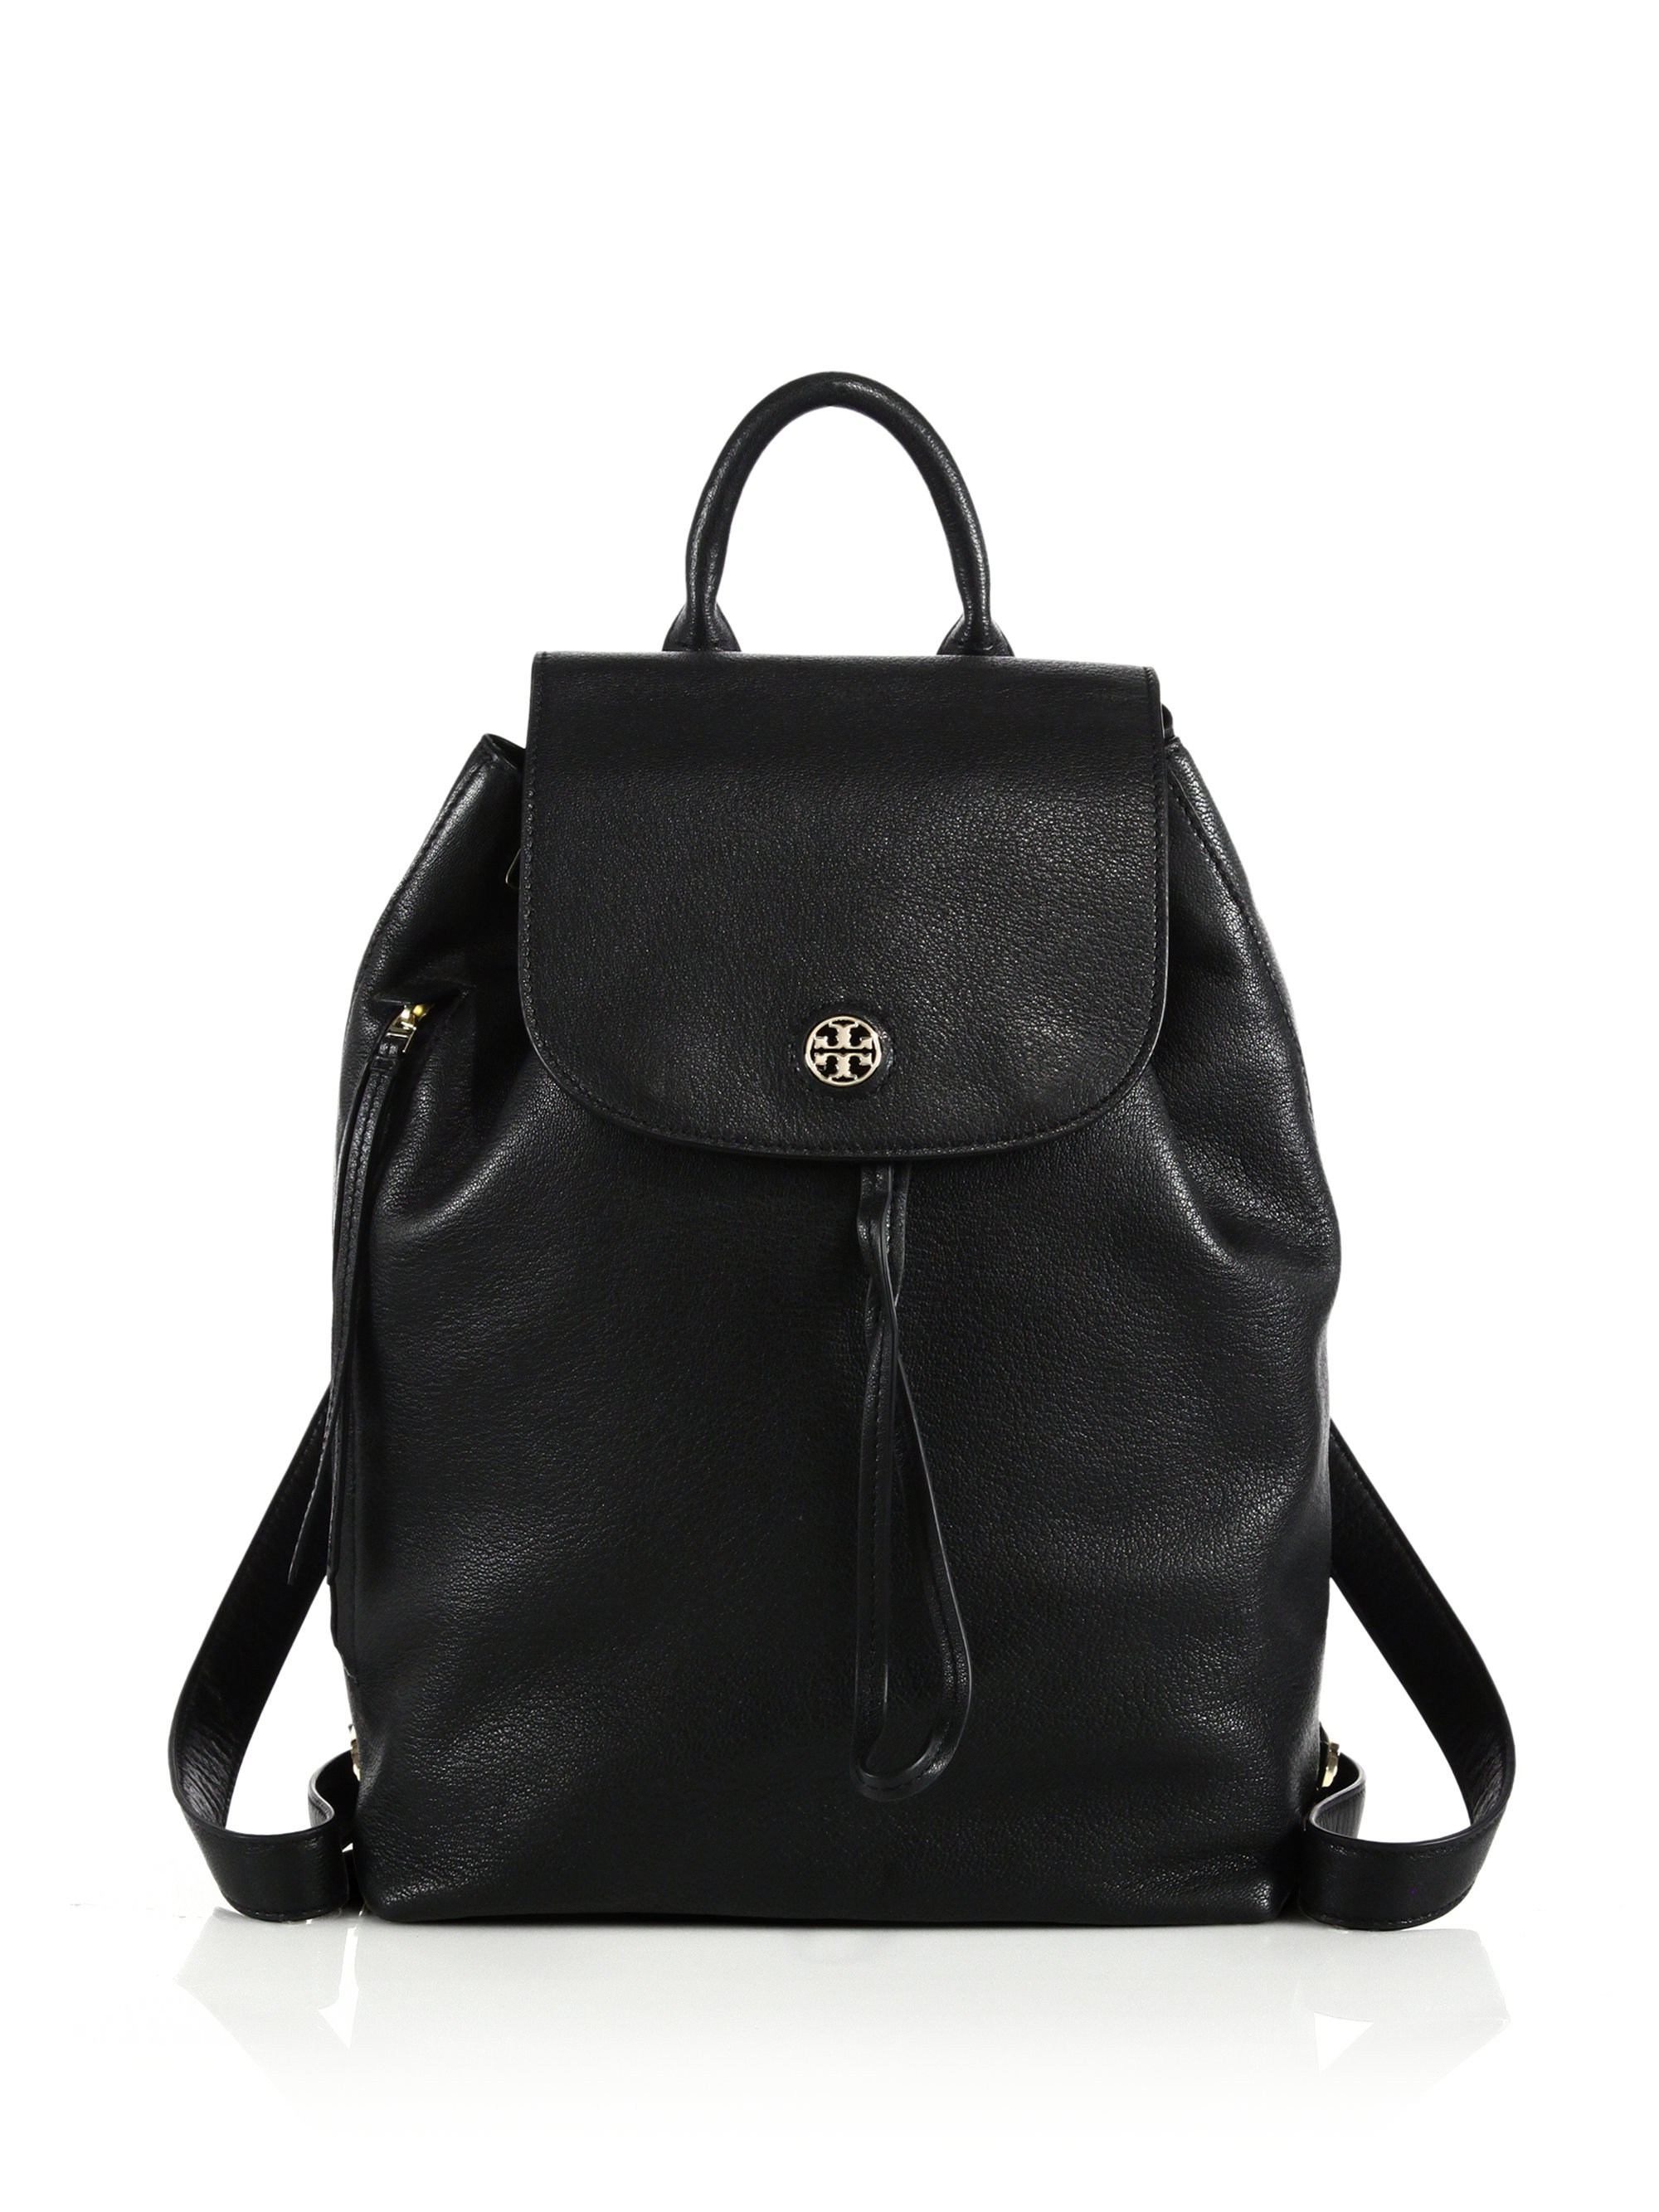 Arriba 60+ imagen tory burch black leather backpack purse